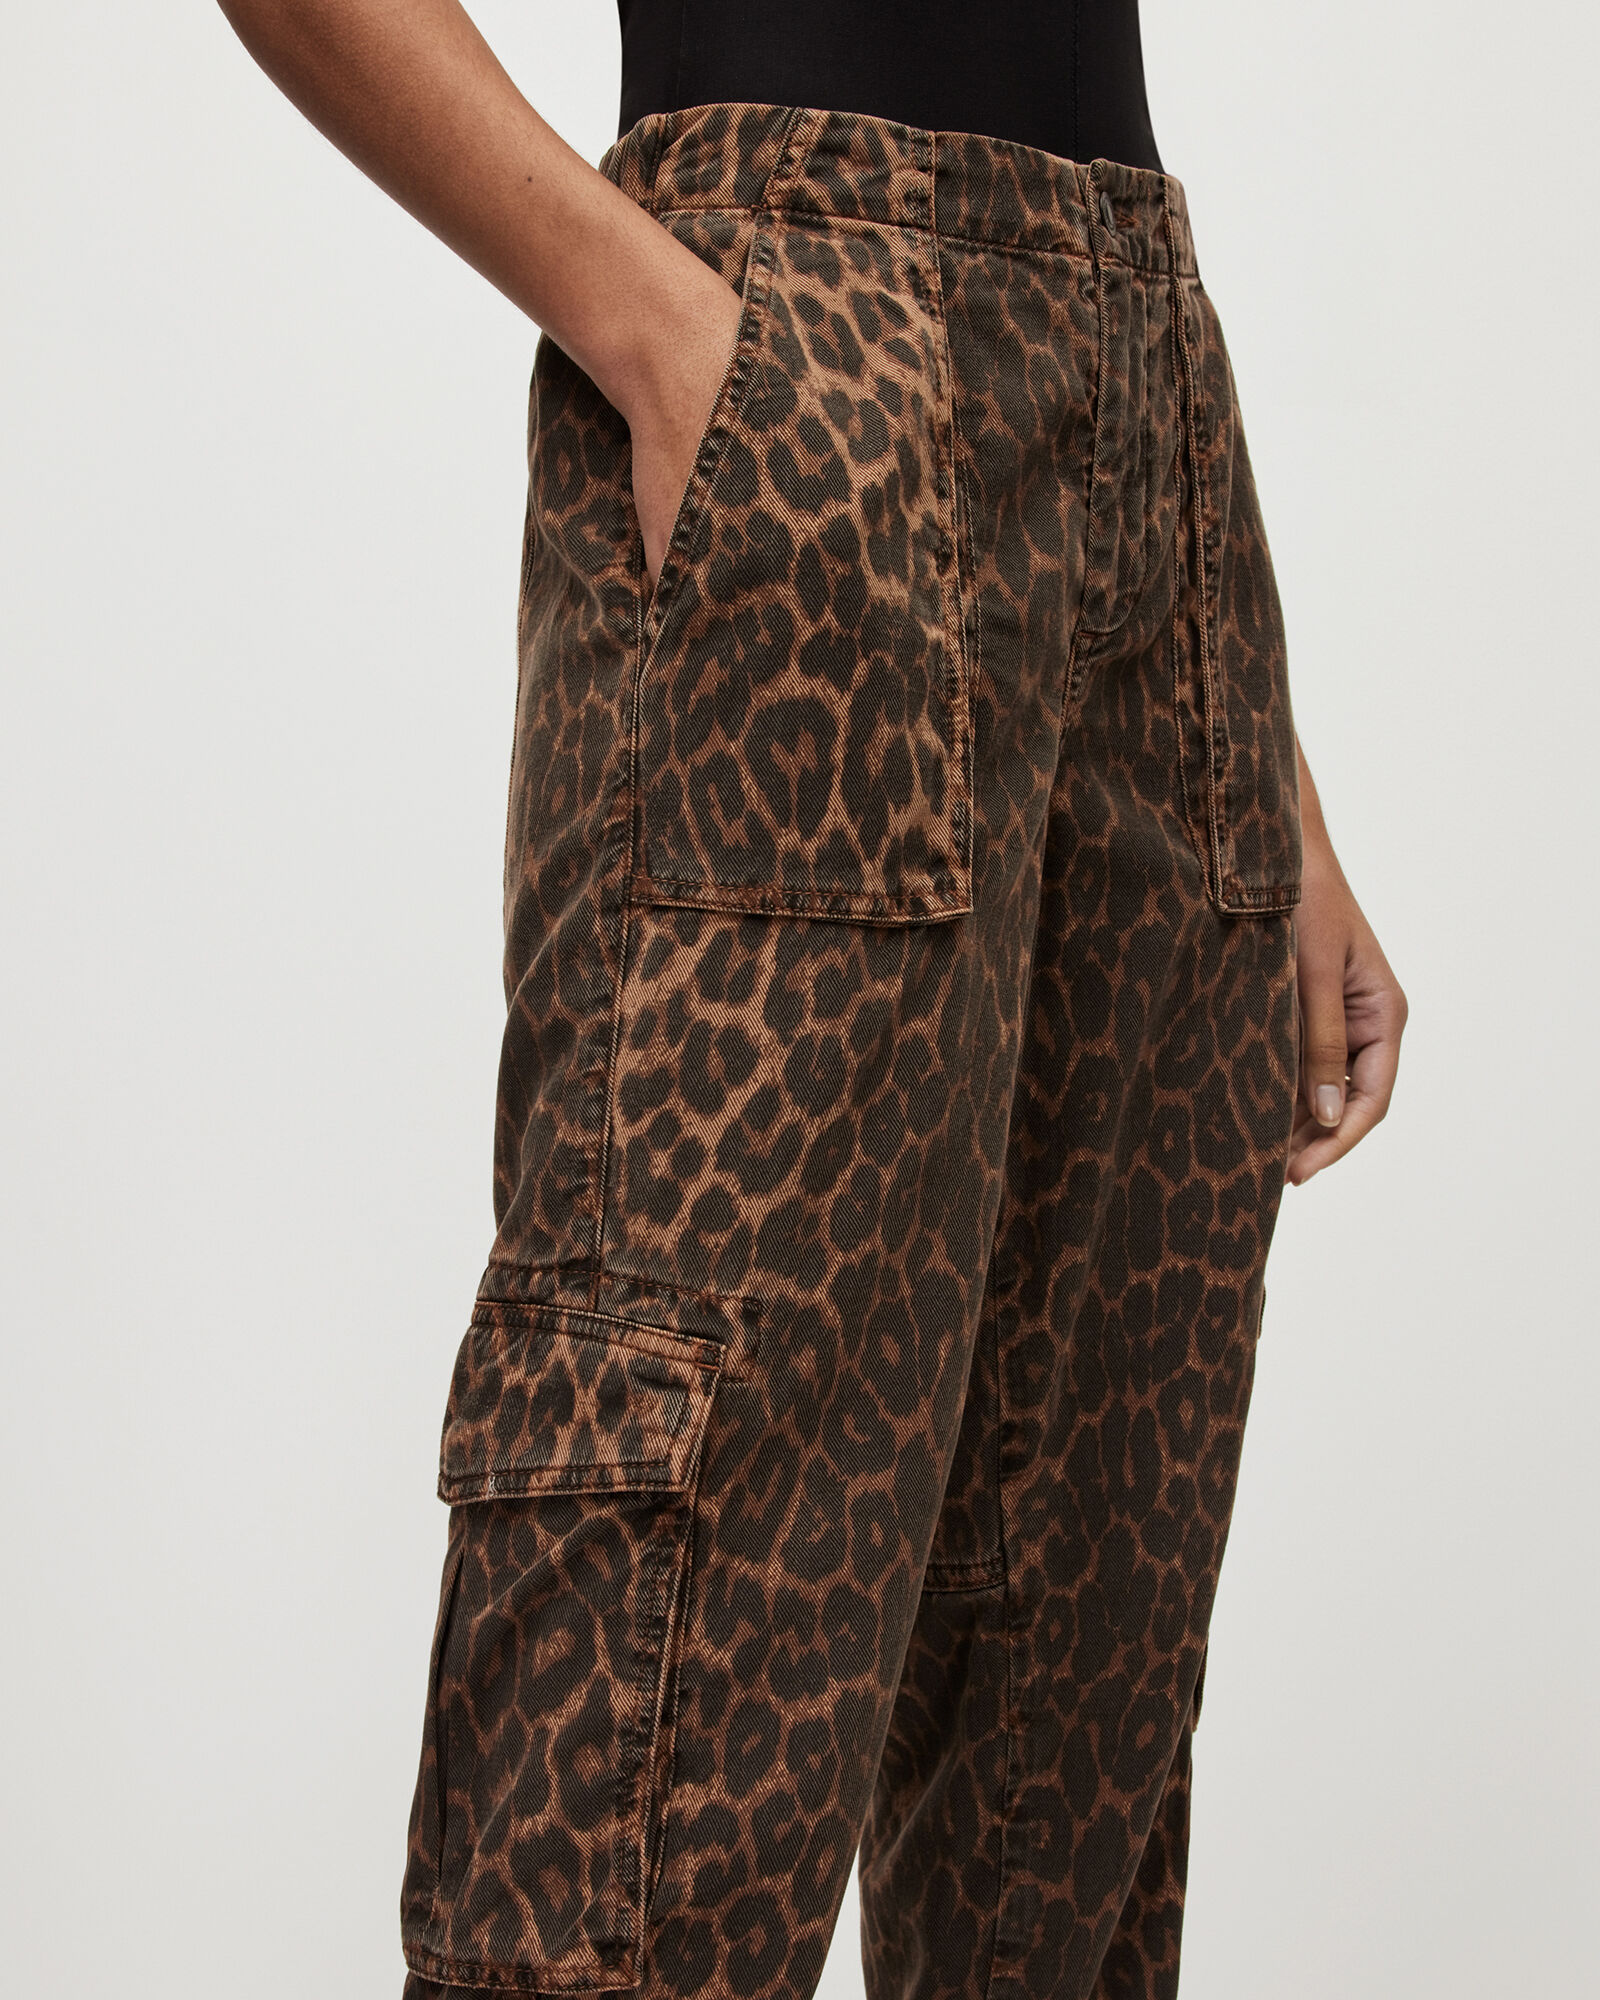 Leopard Wide Leg Trousers by Vogue Williams  Little Mistress